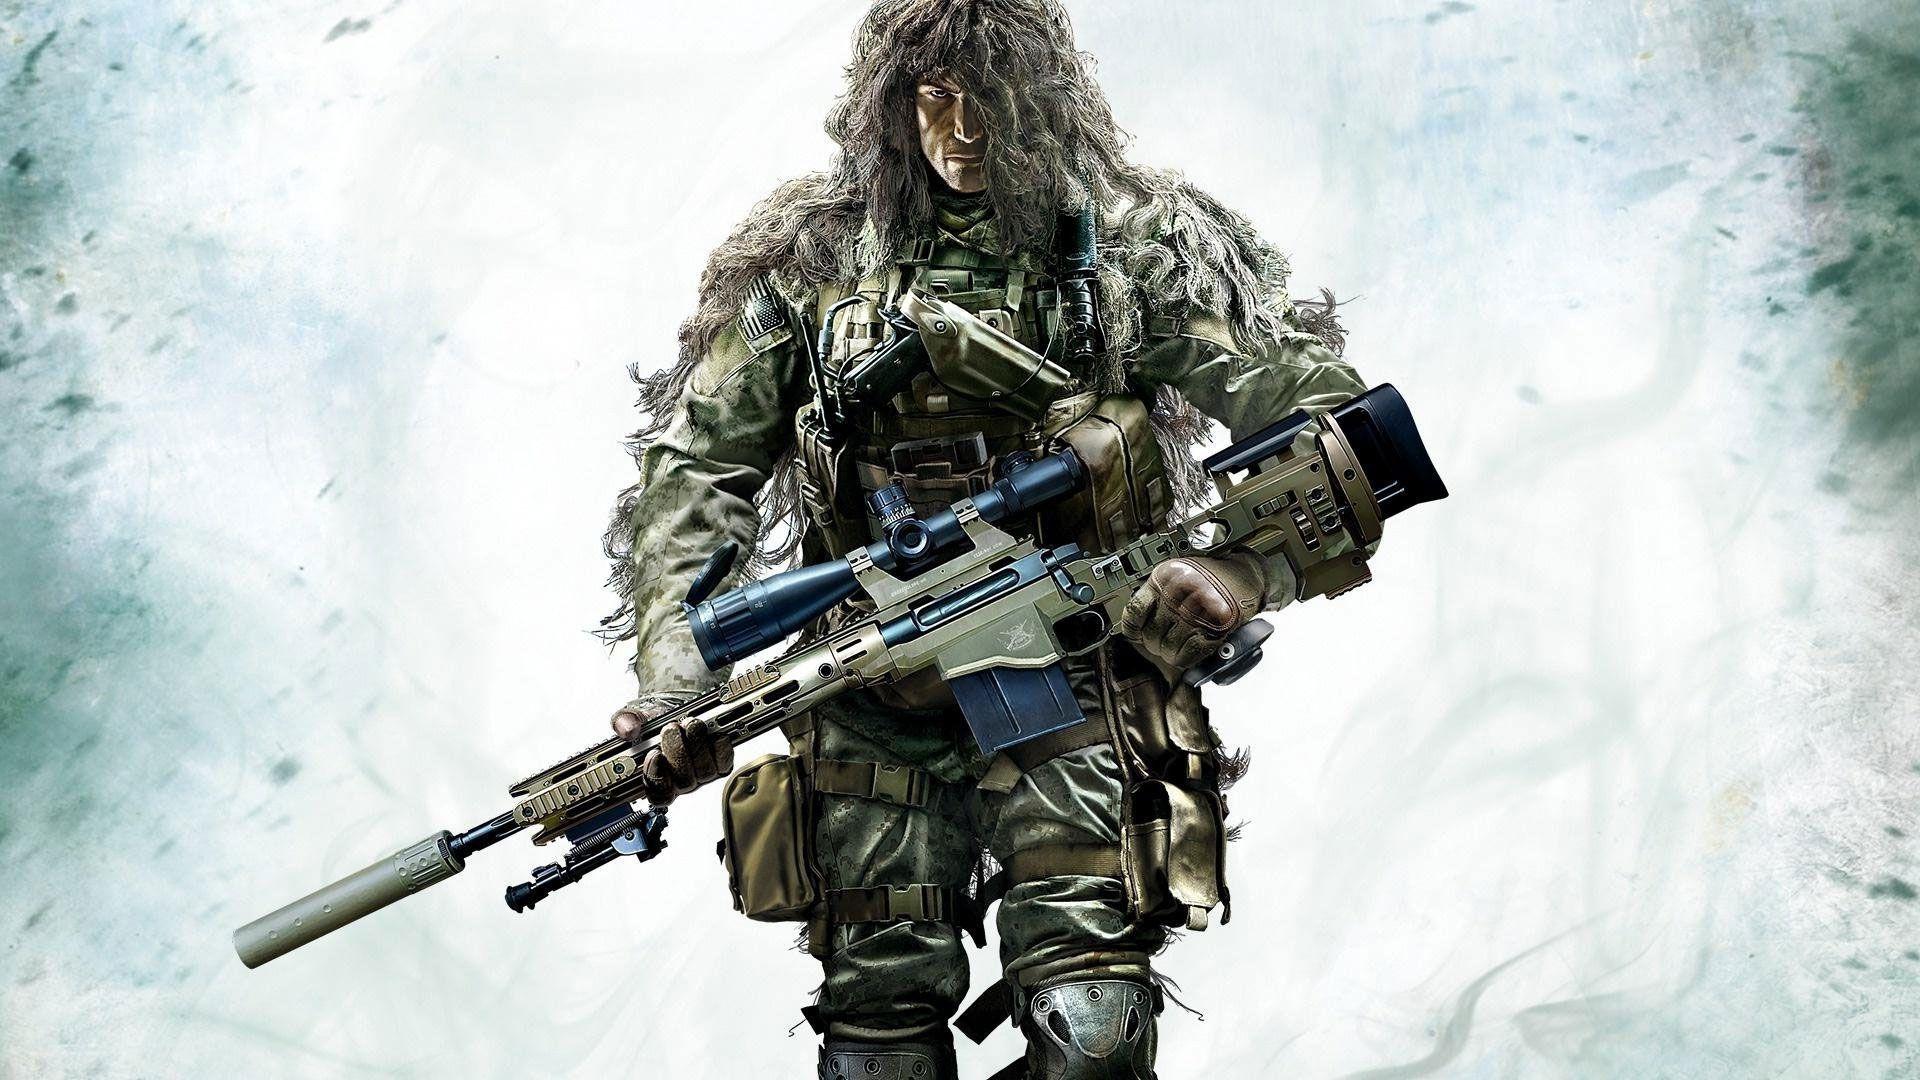 Sniper Ghost Warrior 3 Wallpaper in Ultra HDK